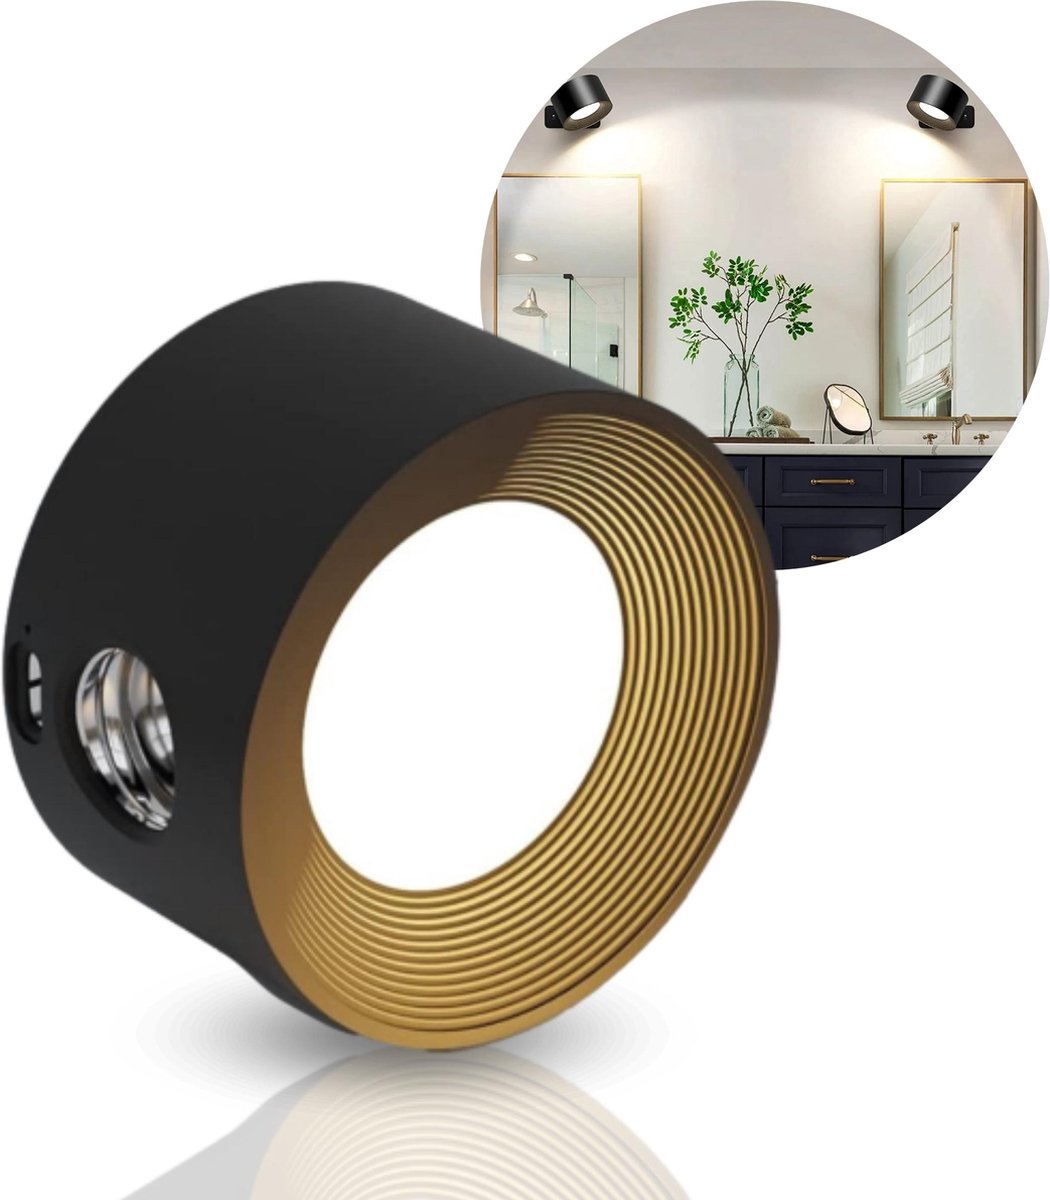 Wandlamp Binnen Led Draadloos – Leeslamp Wand - USB Oplaadbaar – Woonkamer industrieel – Wandspot – 360° draaien - Wandlamp Zonder Snoer – Zonder boren - Zwart